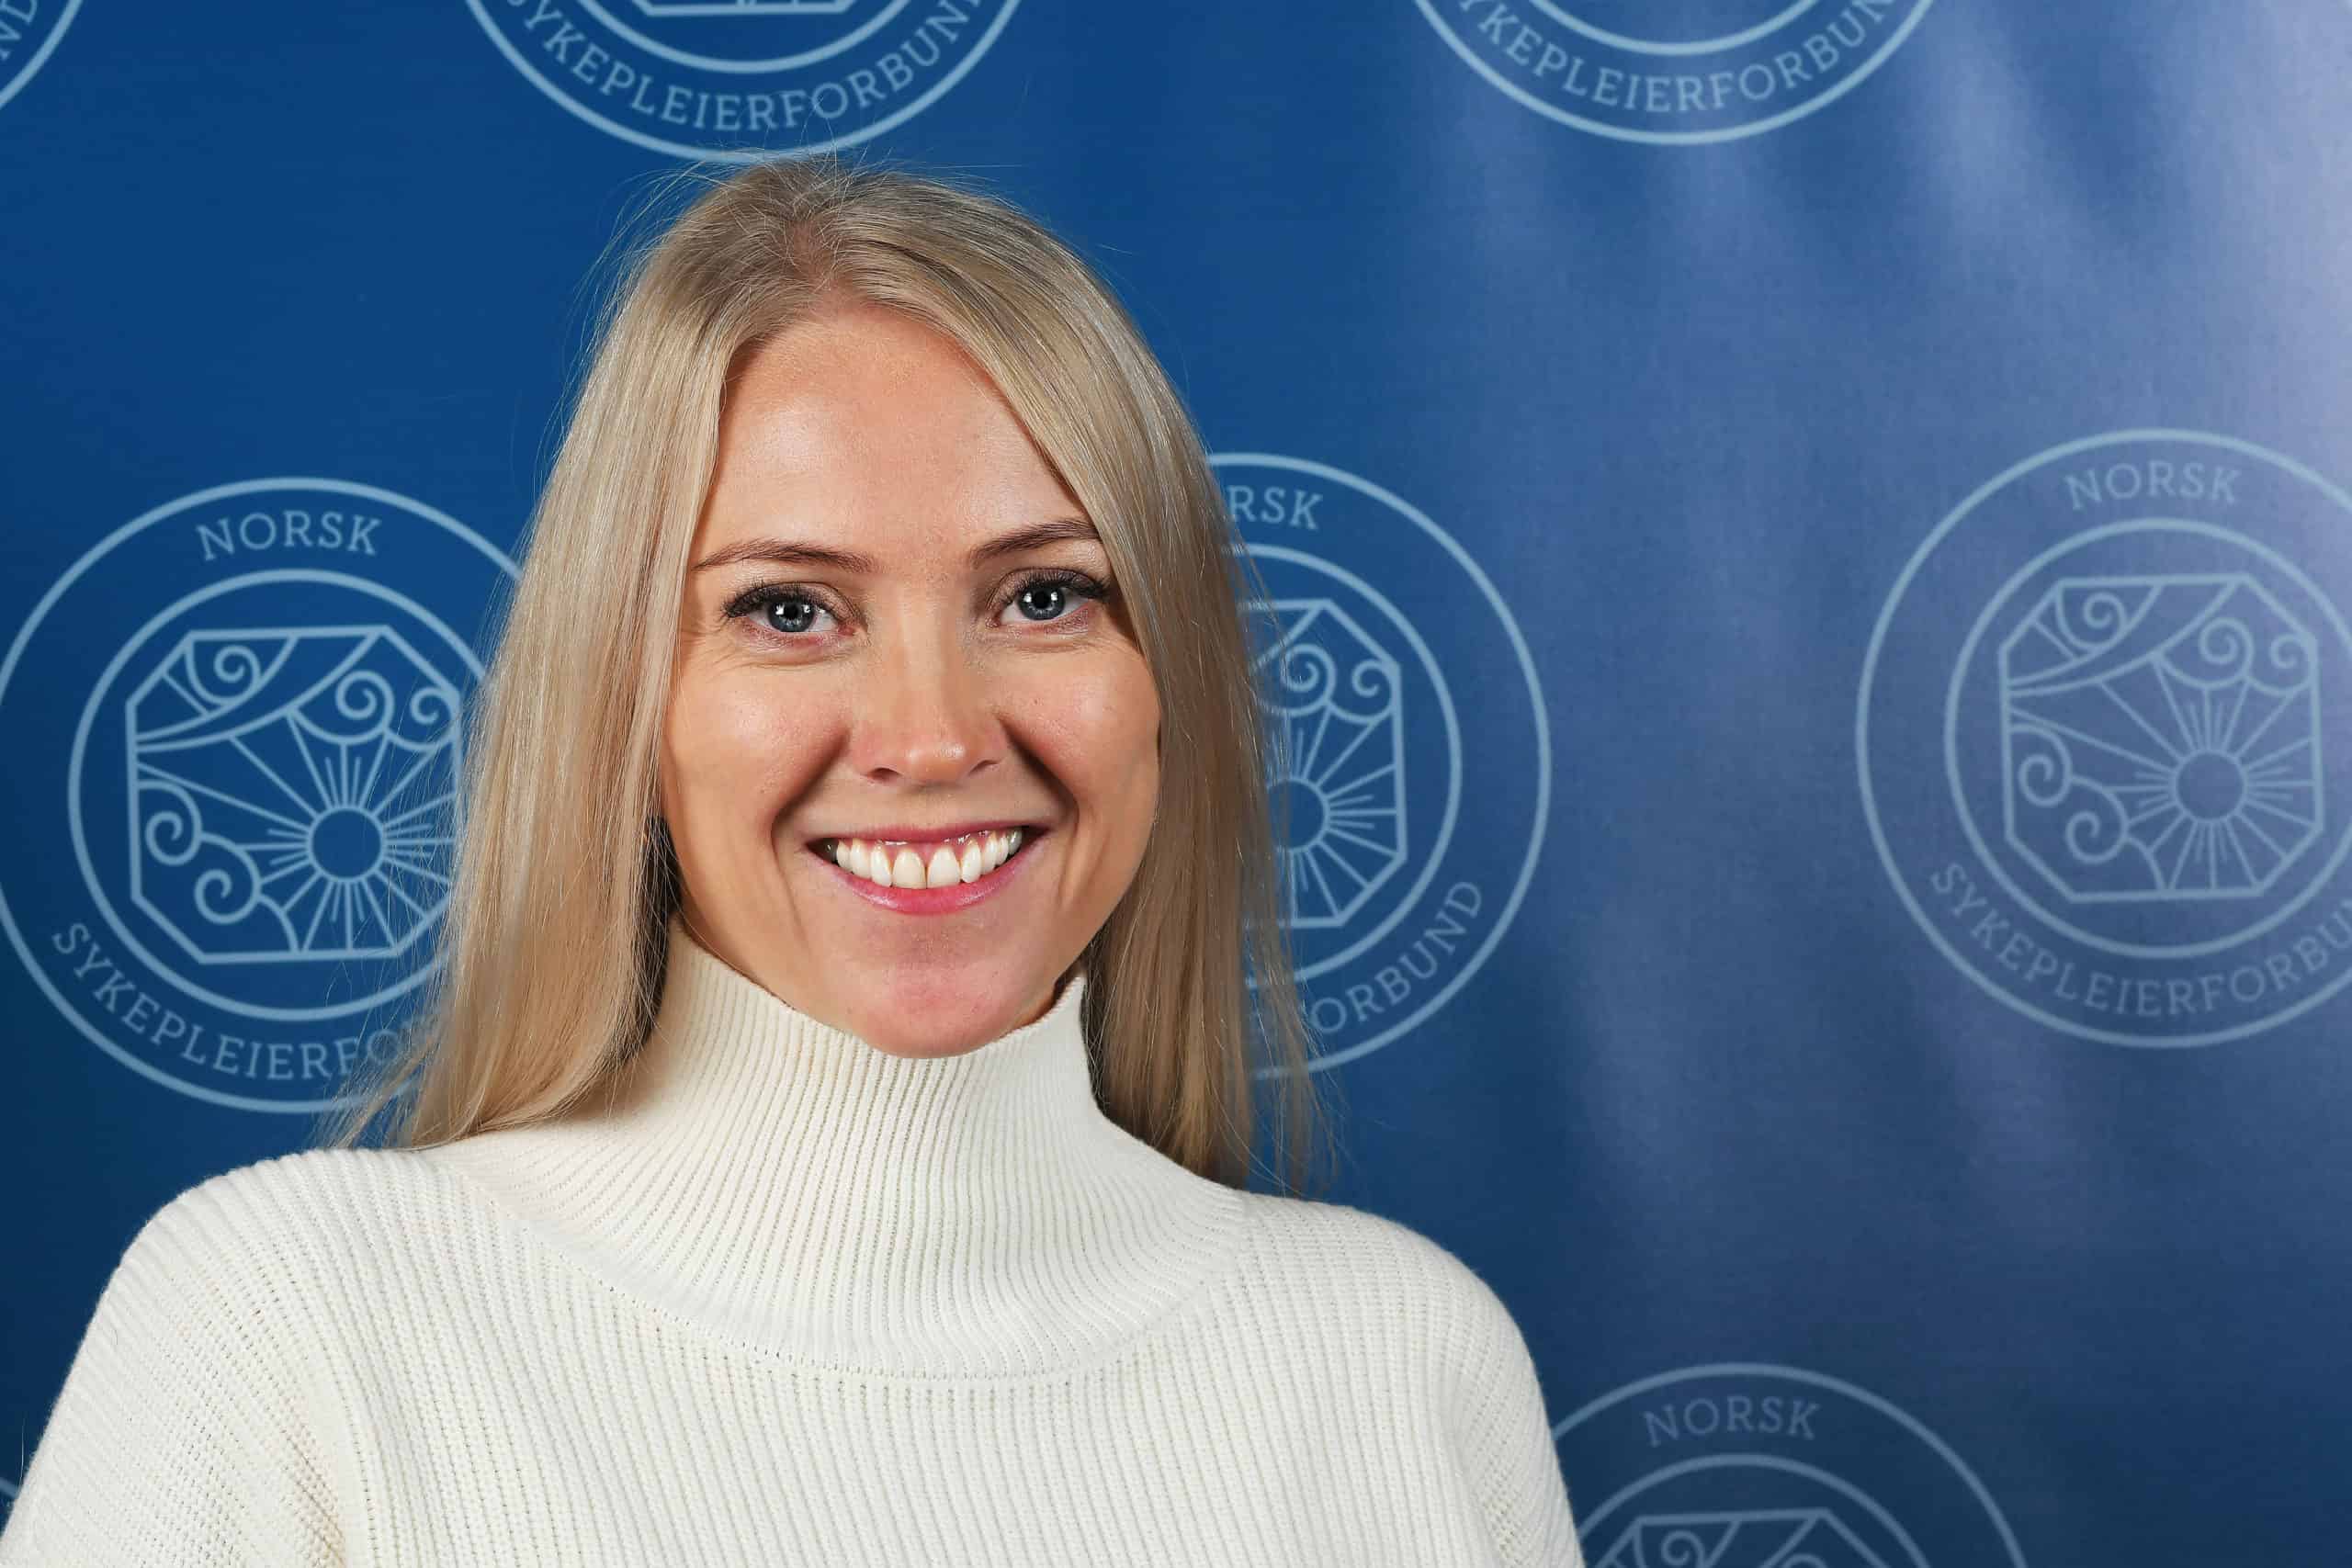 Kandidater til verv på landsmøtet 2019
Lill Sverresdatter Larsen